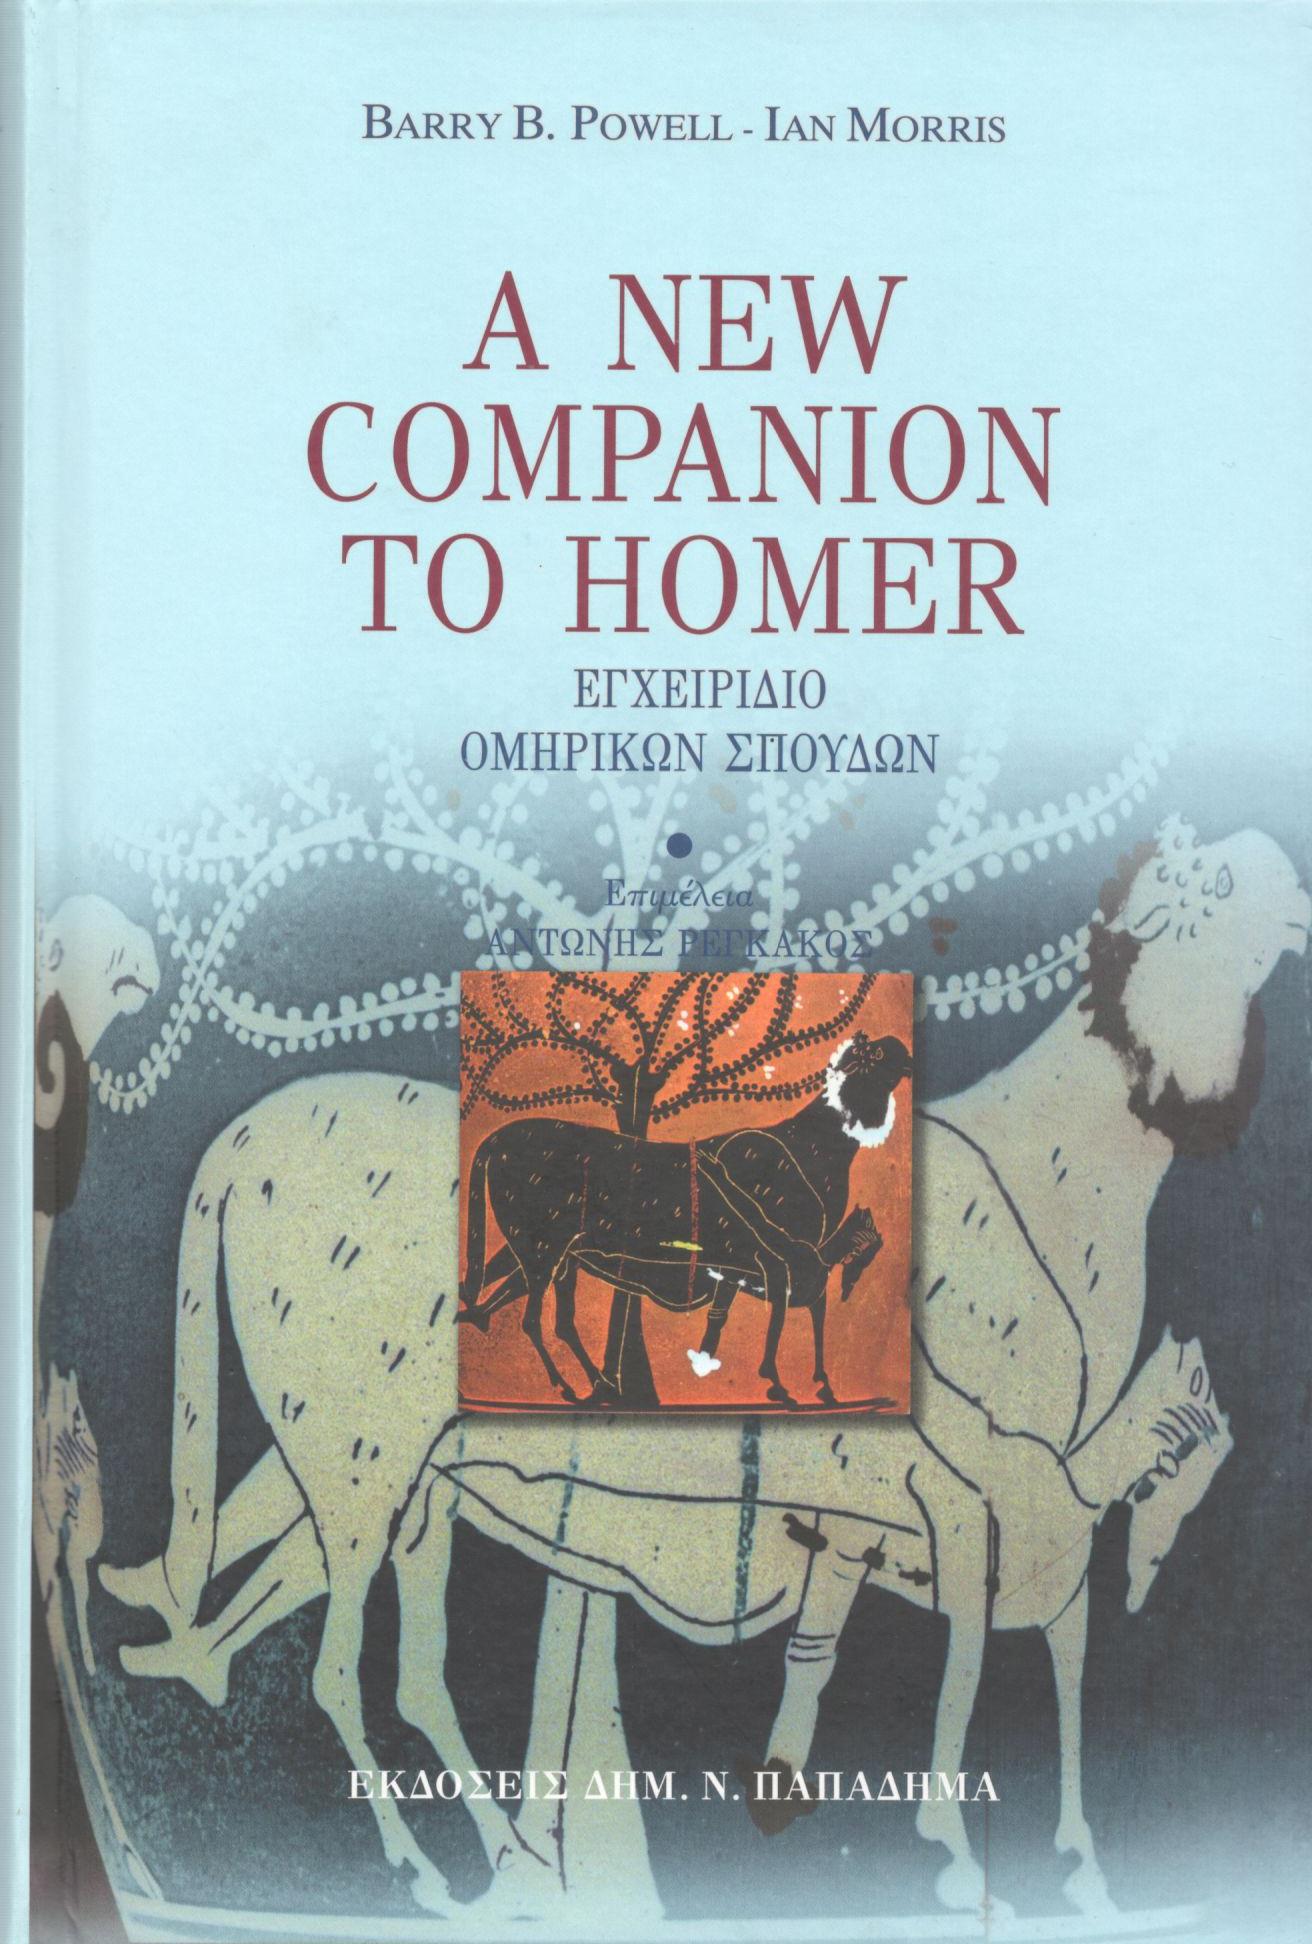 A new companion to Homer (Εγχειρίδιο ομηρικών σπουδών)